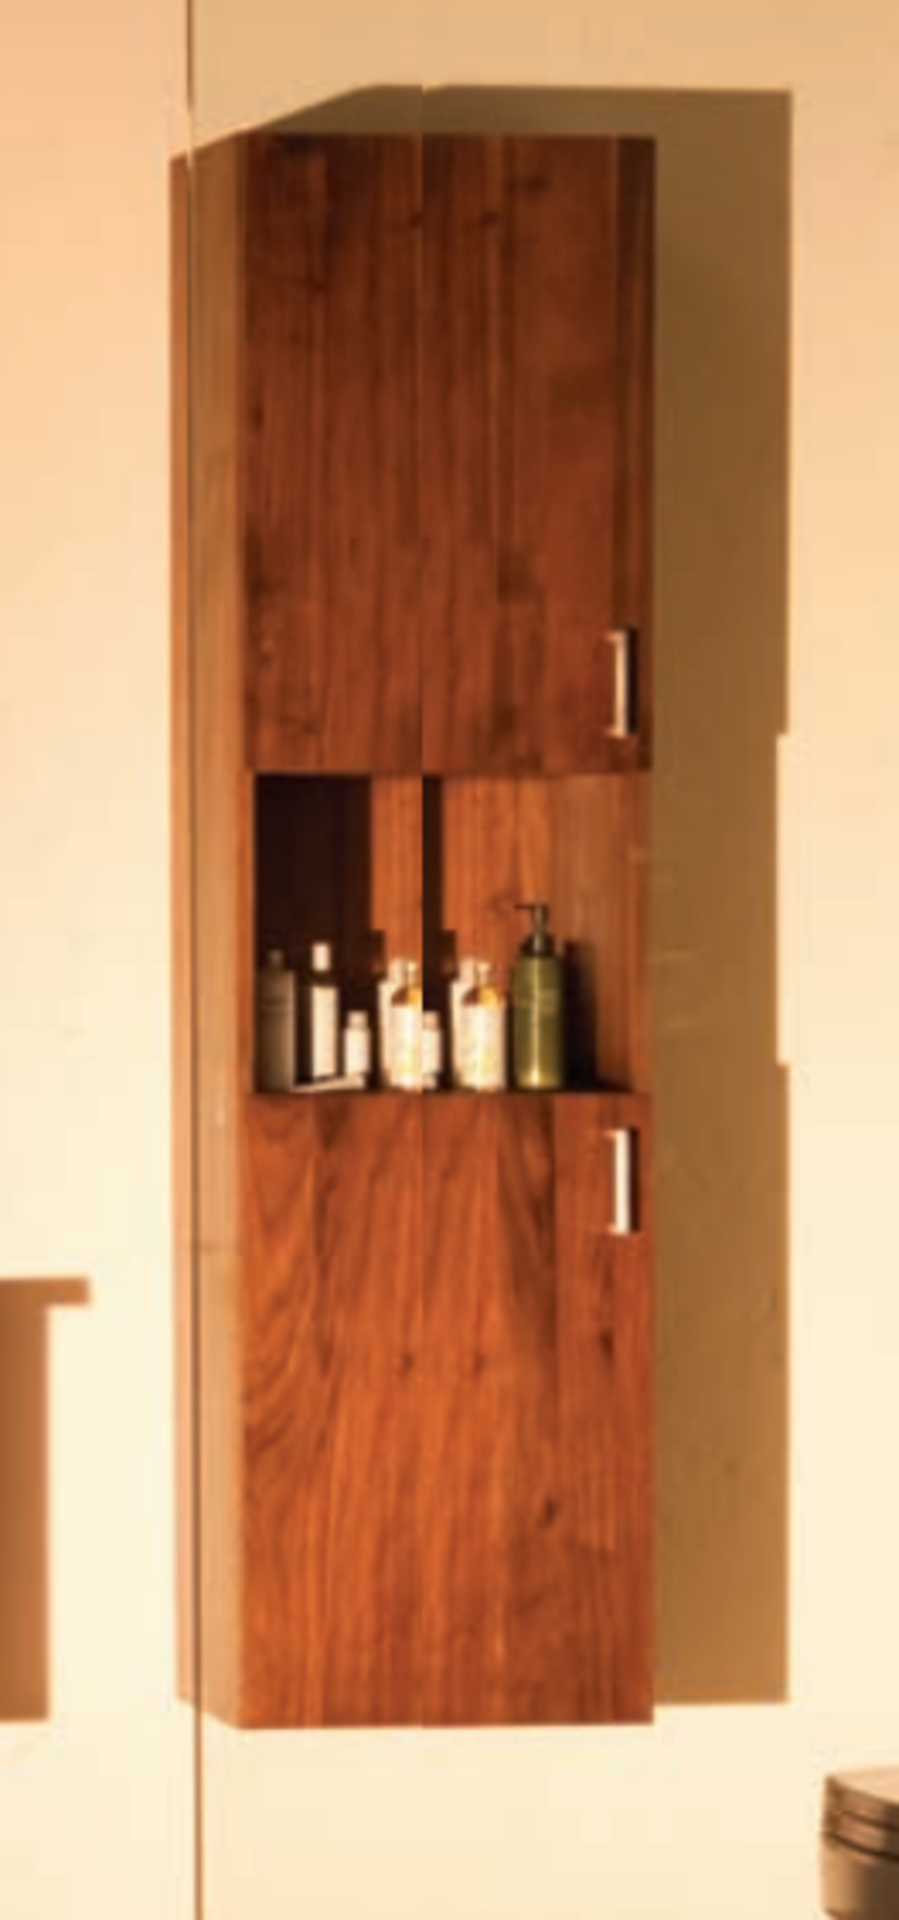 1 x Stonearth Wall Hung Tallboy Bathroom Storage Cabinet - American Solid Walnut - Original RRP £996 - Image 14 of 16